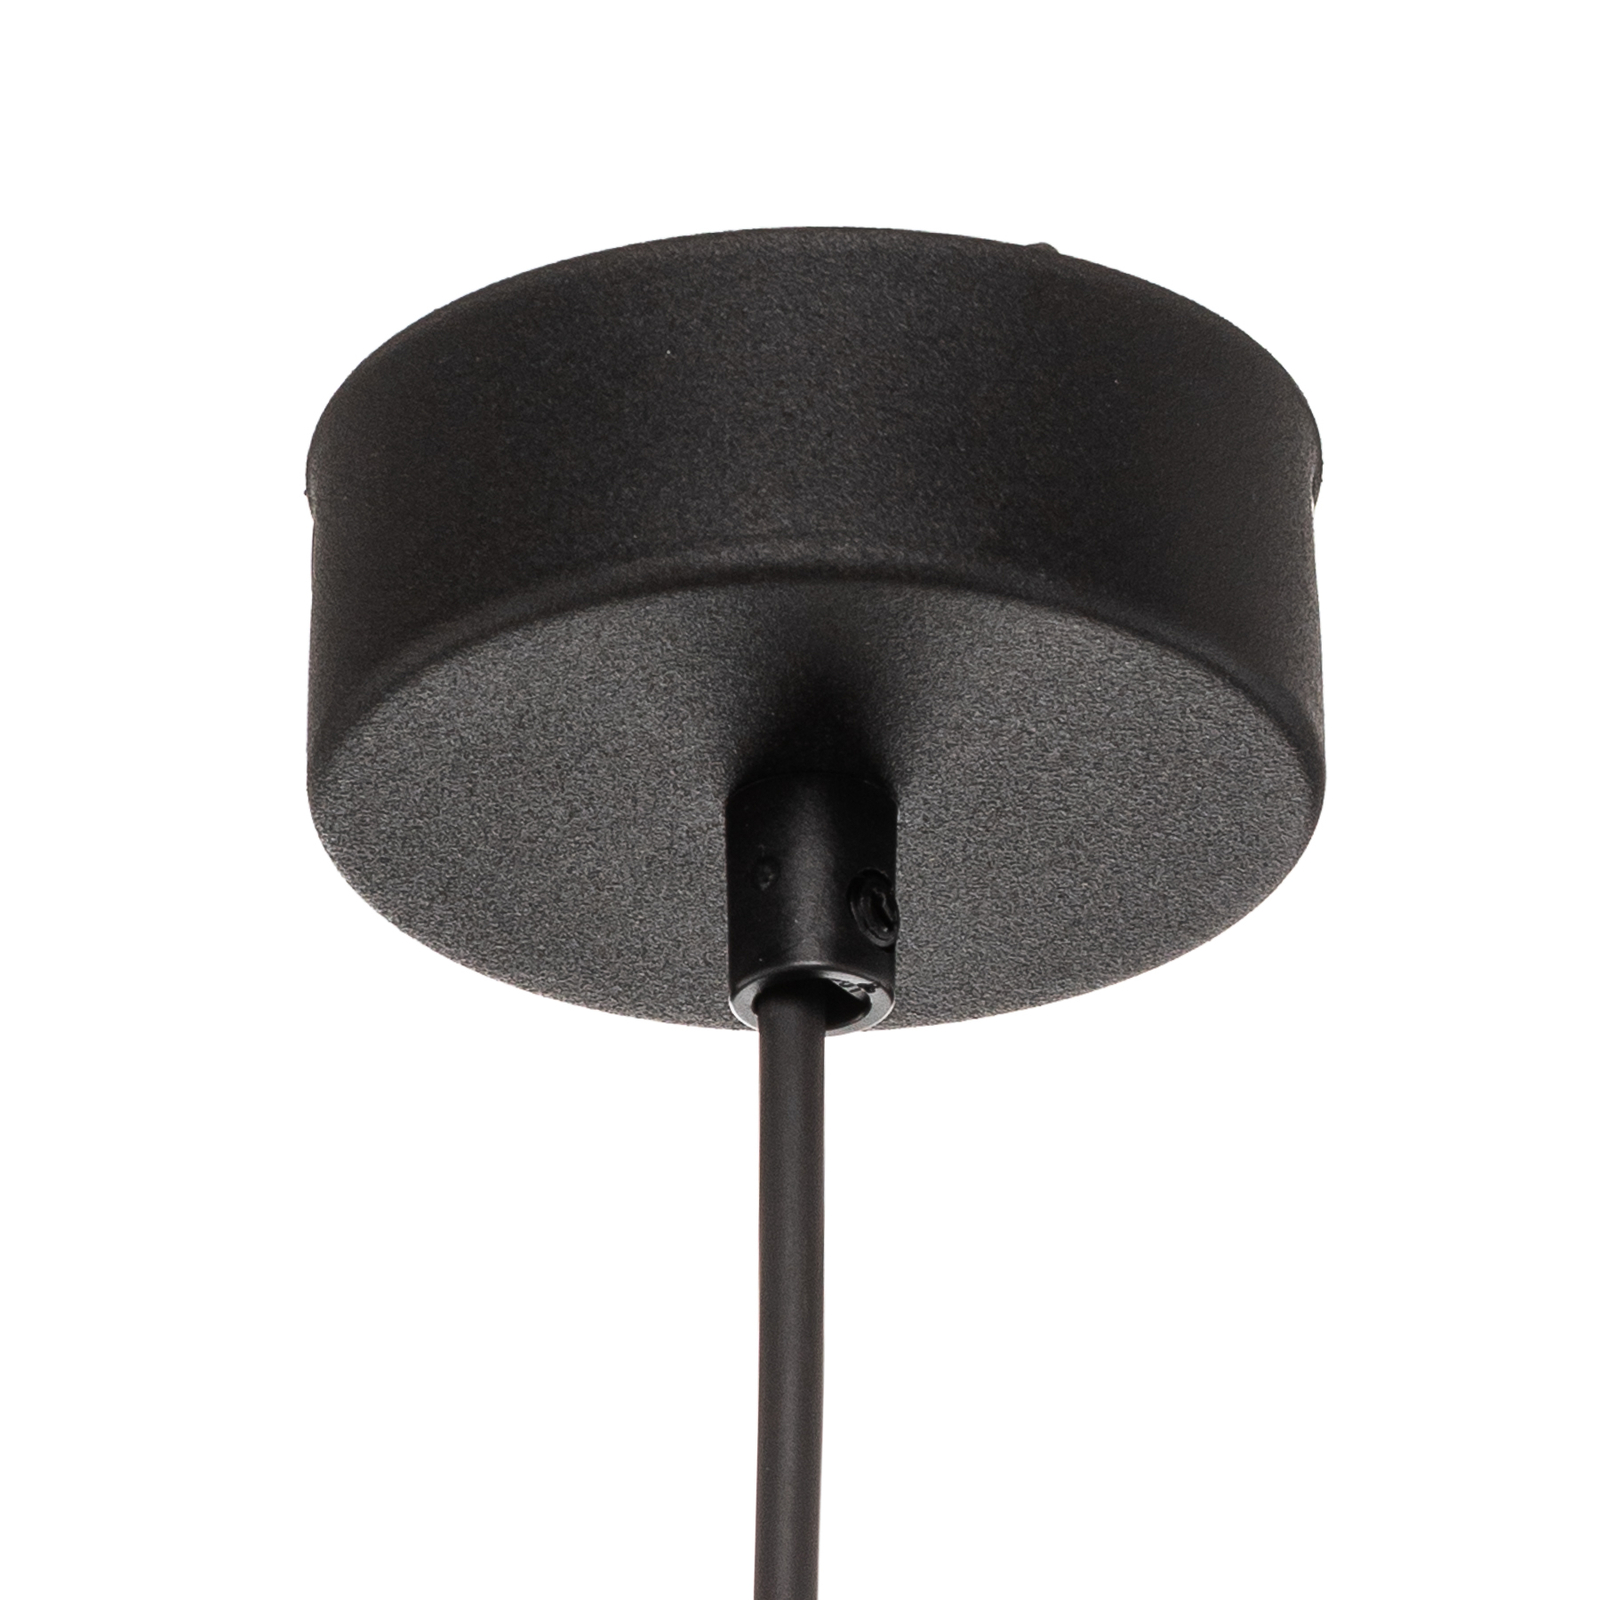 Hanglamp Maxi, Ø 30 cm, 1-lamp, glazen kap